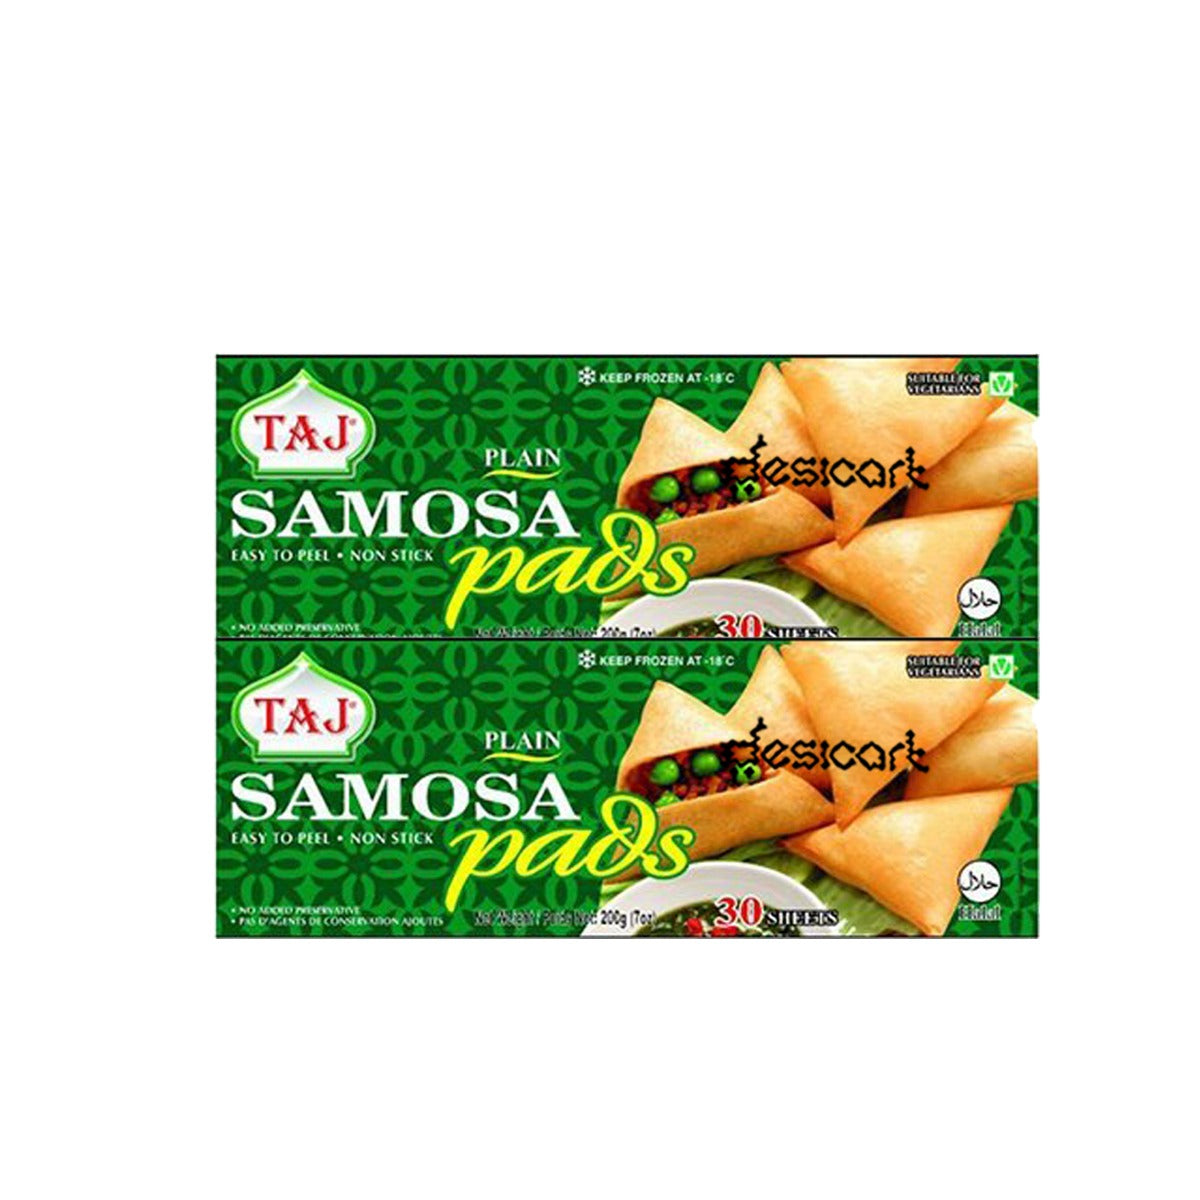 Taj Samosa Pads 30 Sheets (Pack of 2)